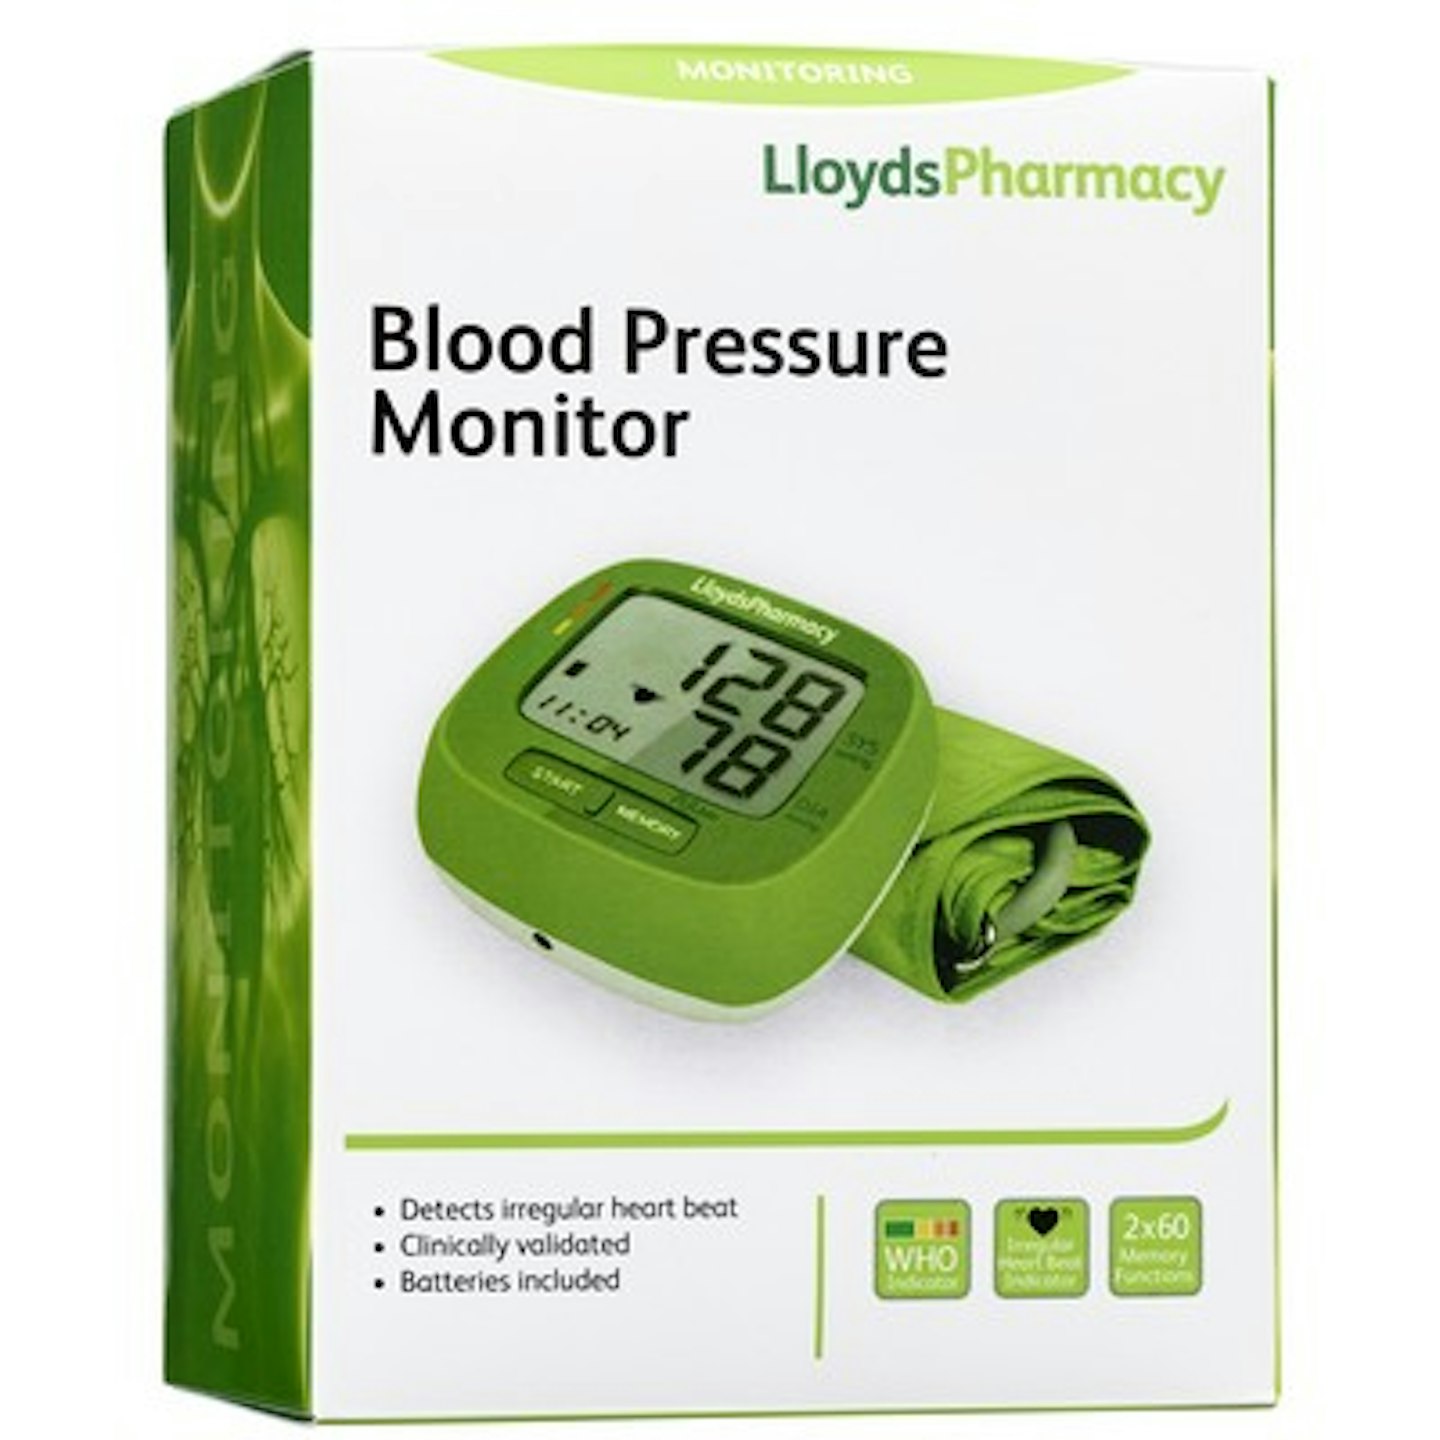 LloydsPharmacy blood pressure monitor and cuff